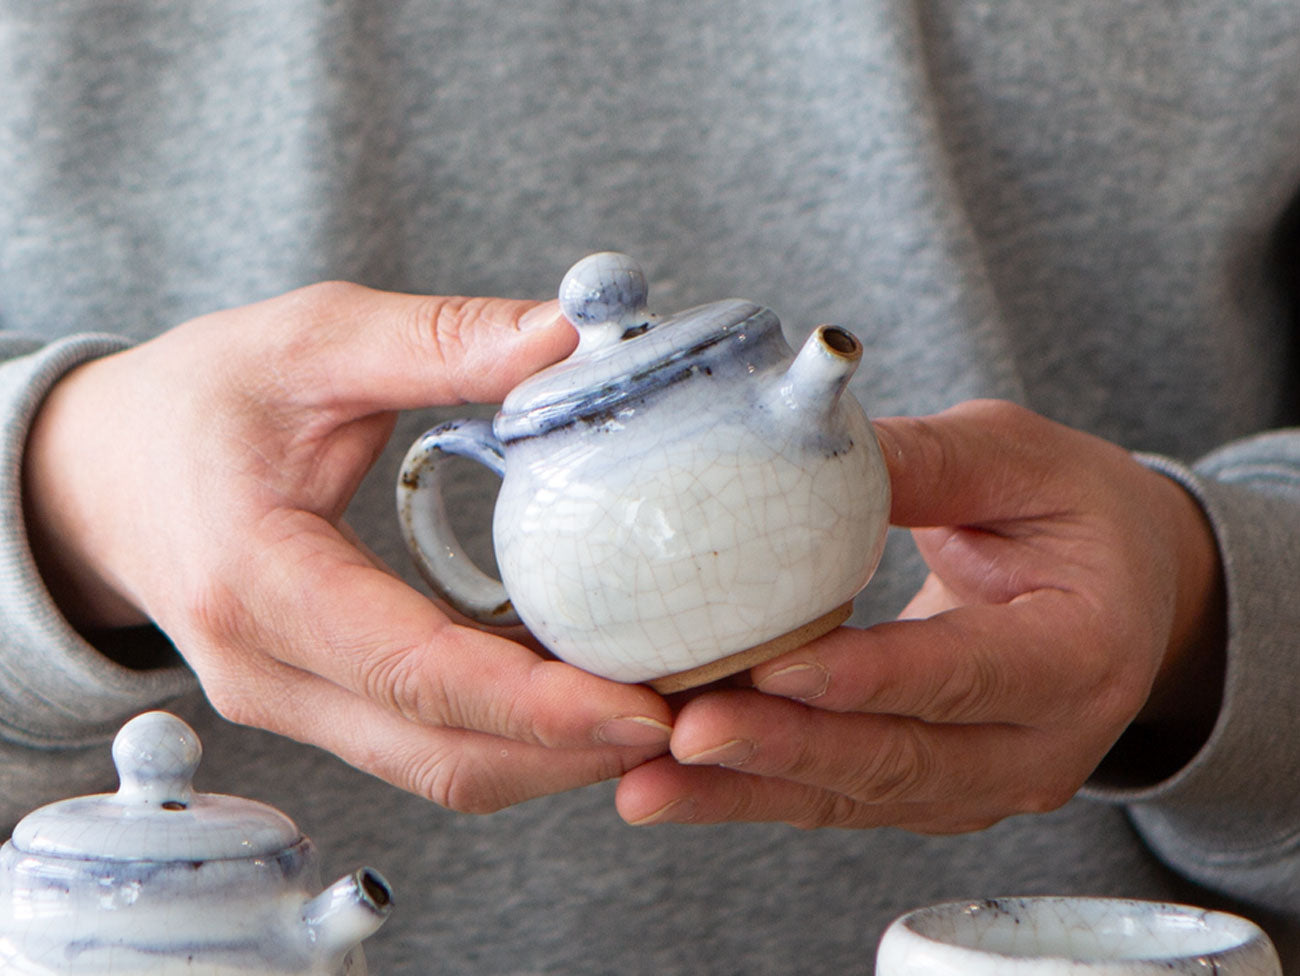 Cobalt Teapot, Variation 1